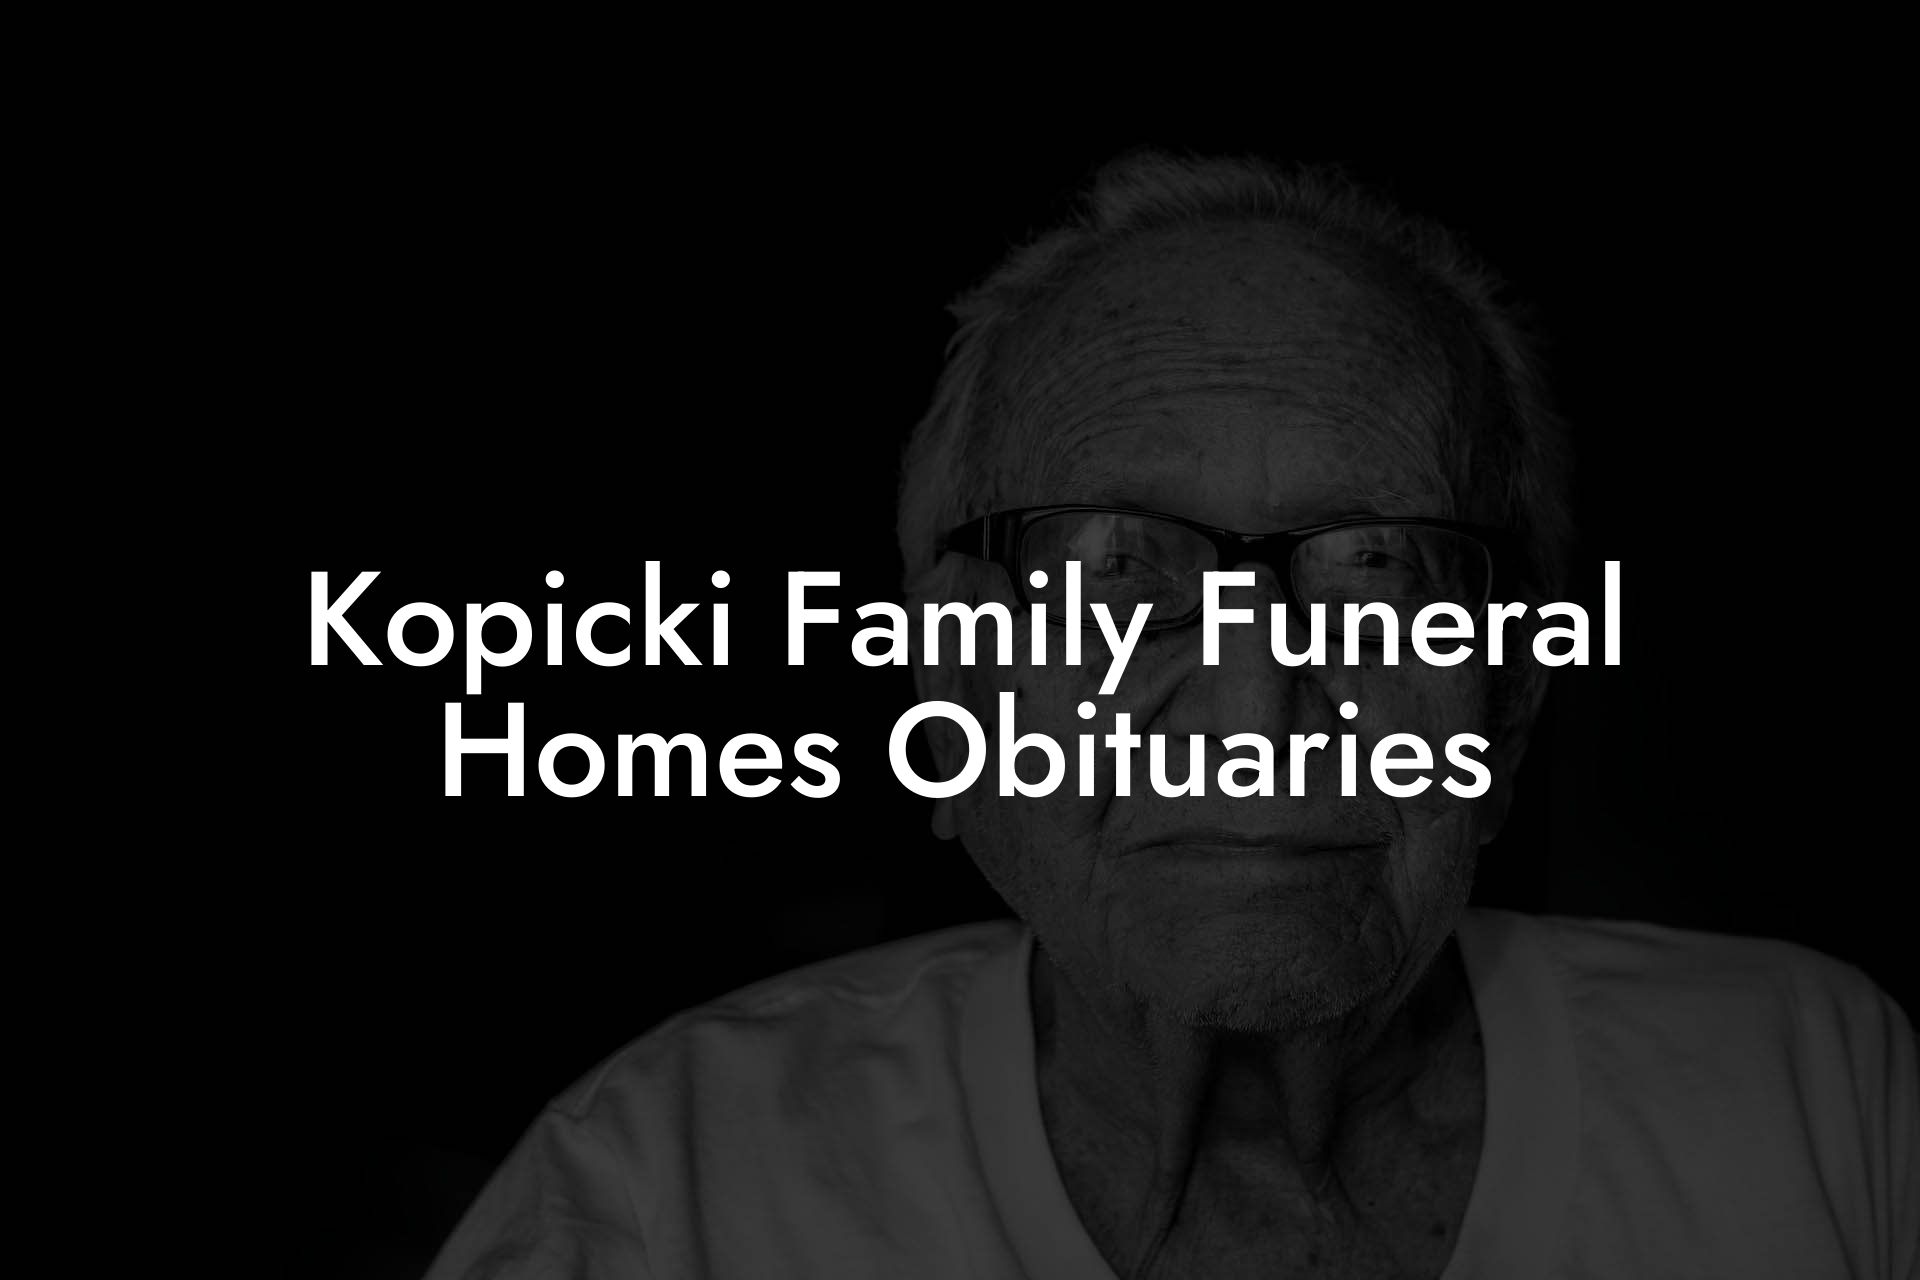 Kopicki Family Funeral Homes Obituaries